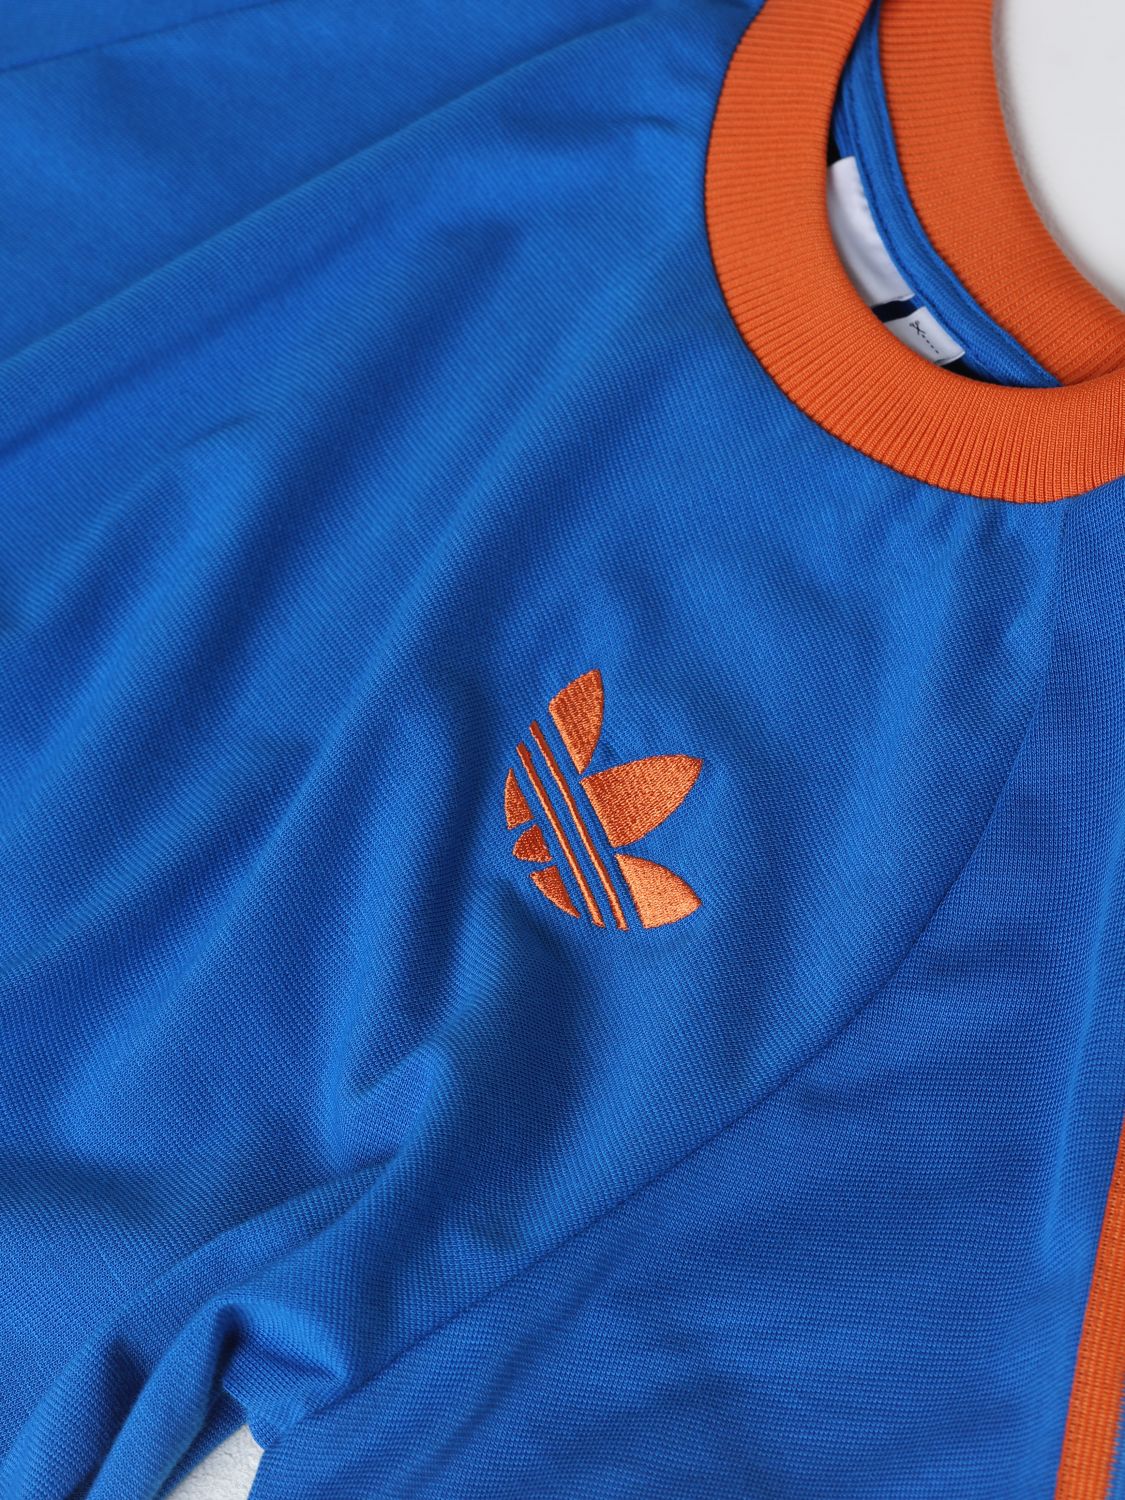 Adidas Originals Outlet: t-shirt - t-shirt | online IP6971 Originals at for Blue man Adidas